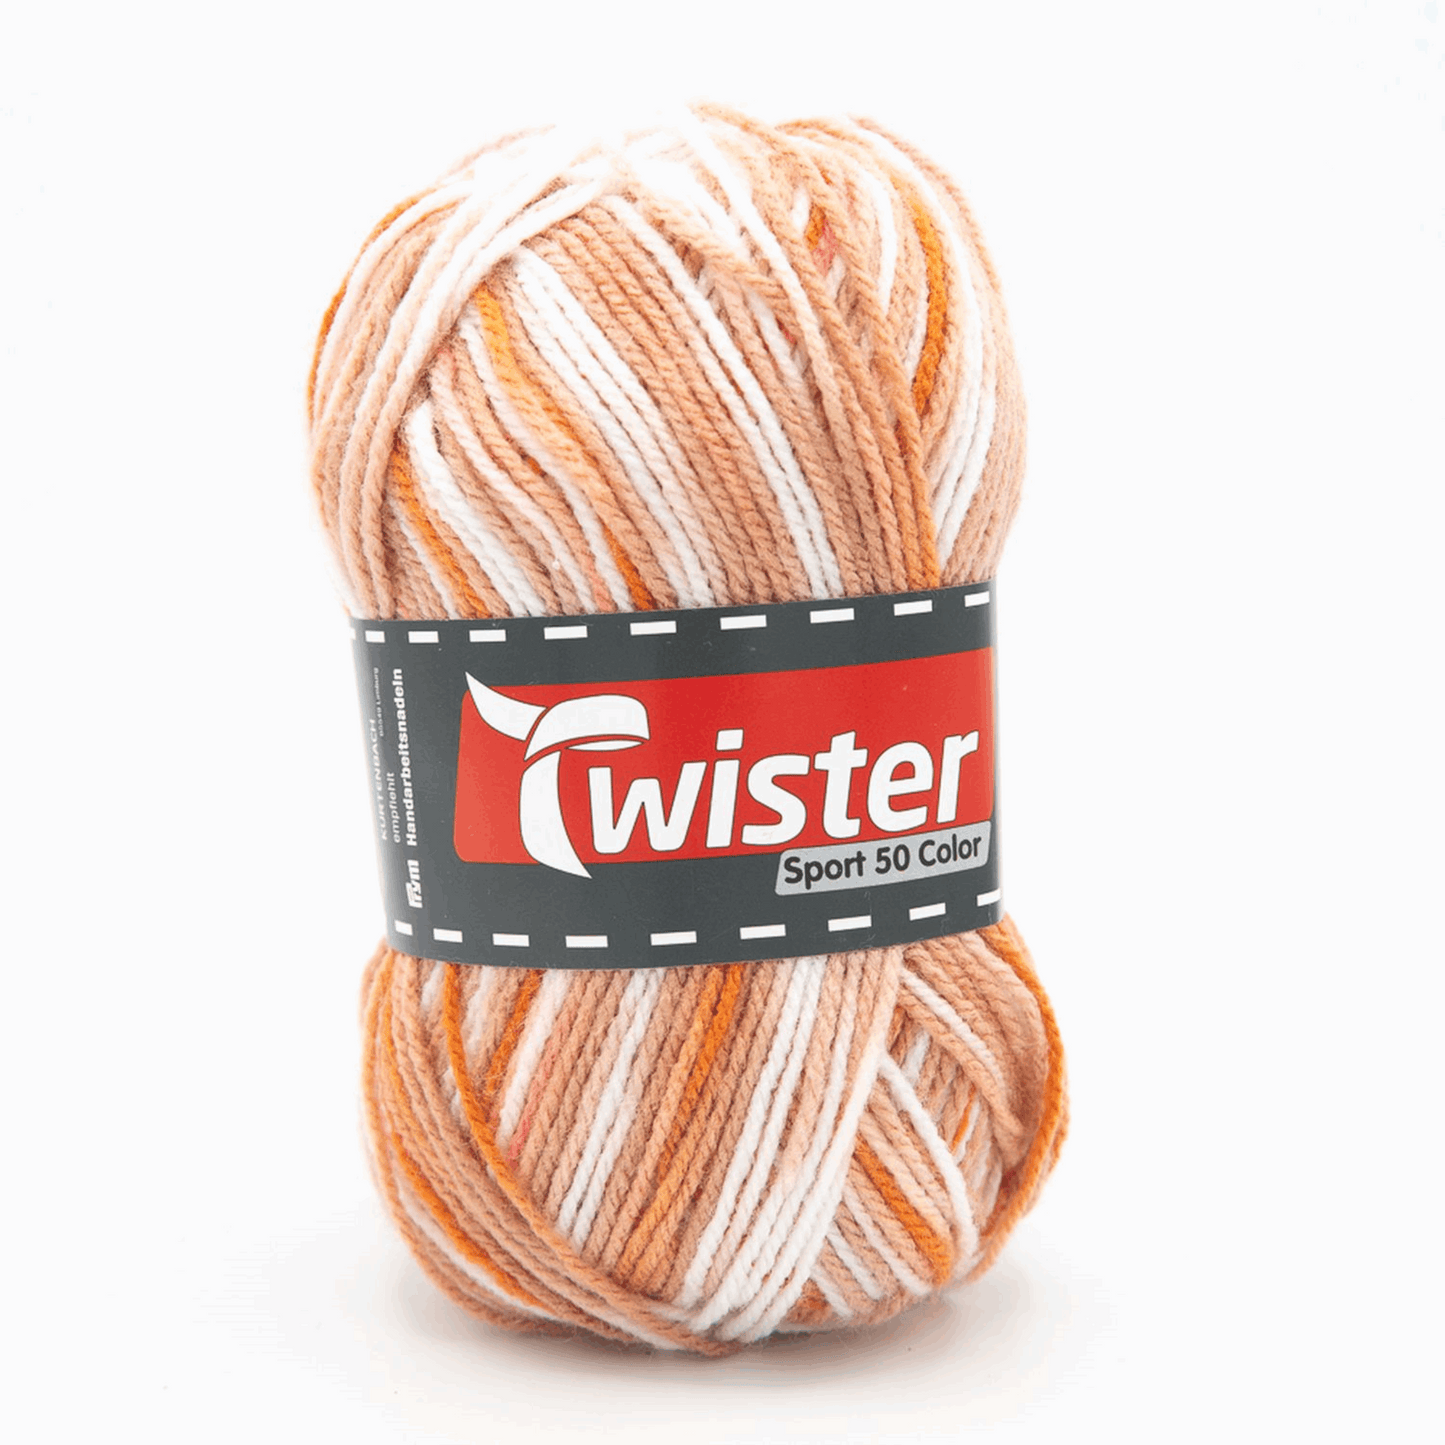 Twister Sport 50, color, 98322, Farbe w/rose/lachs 12